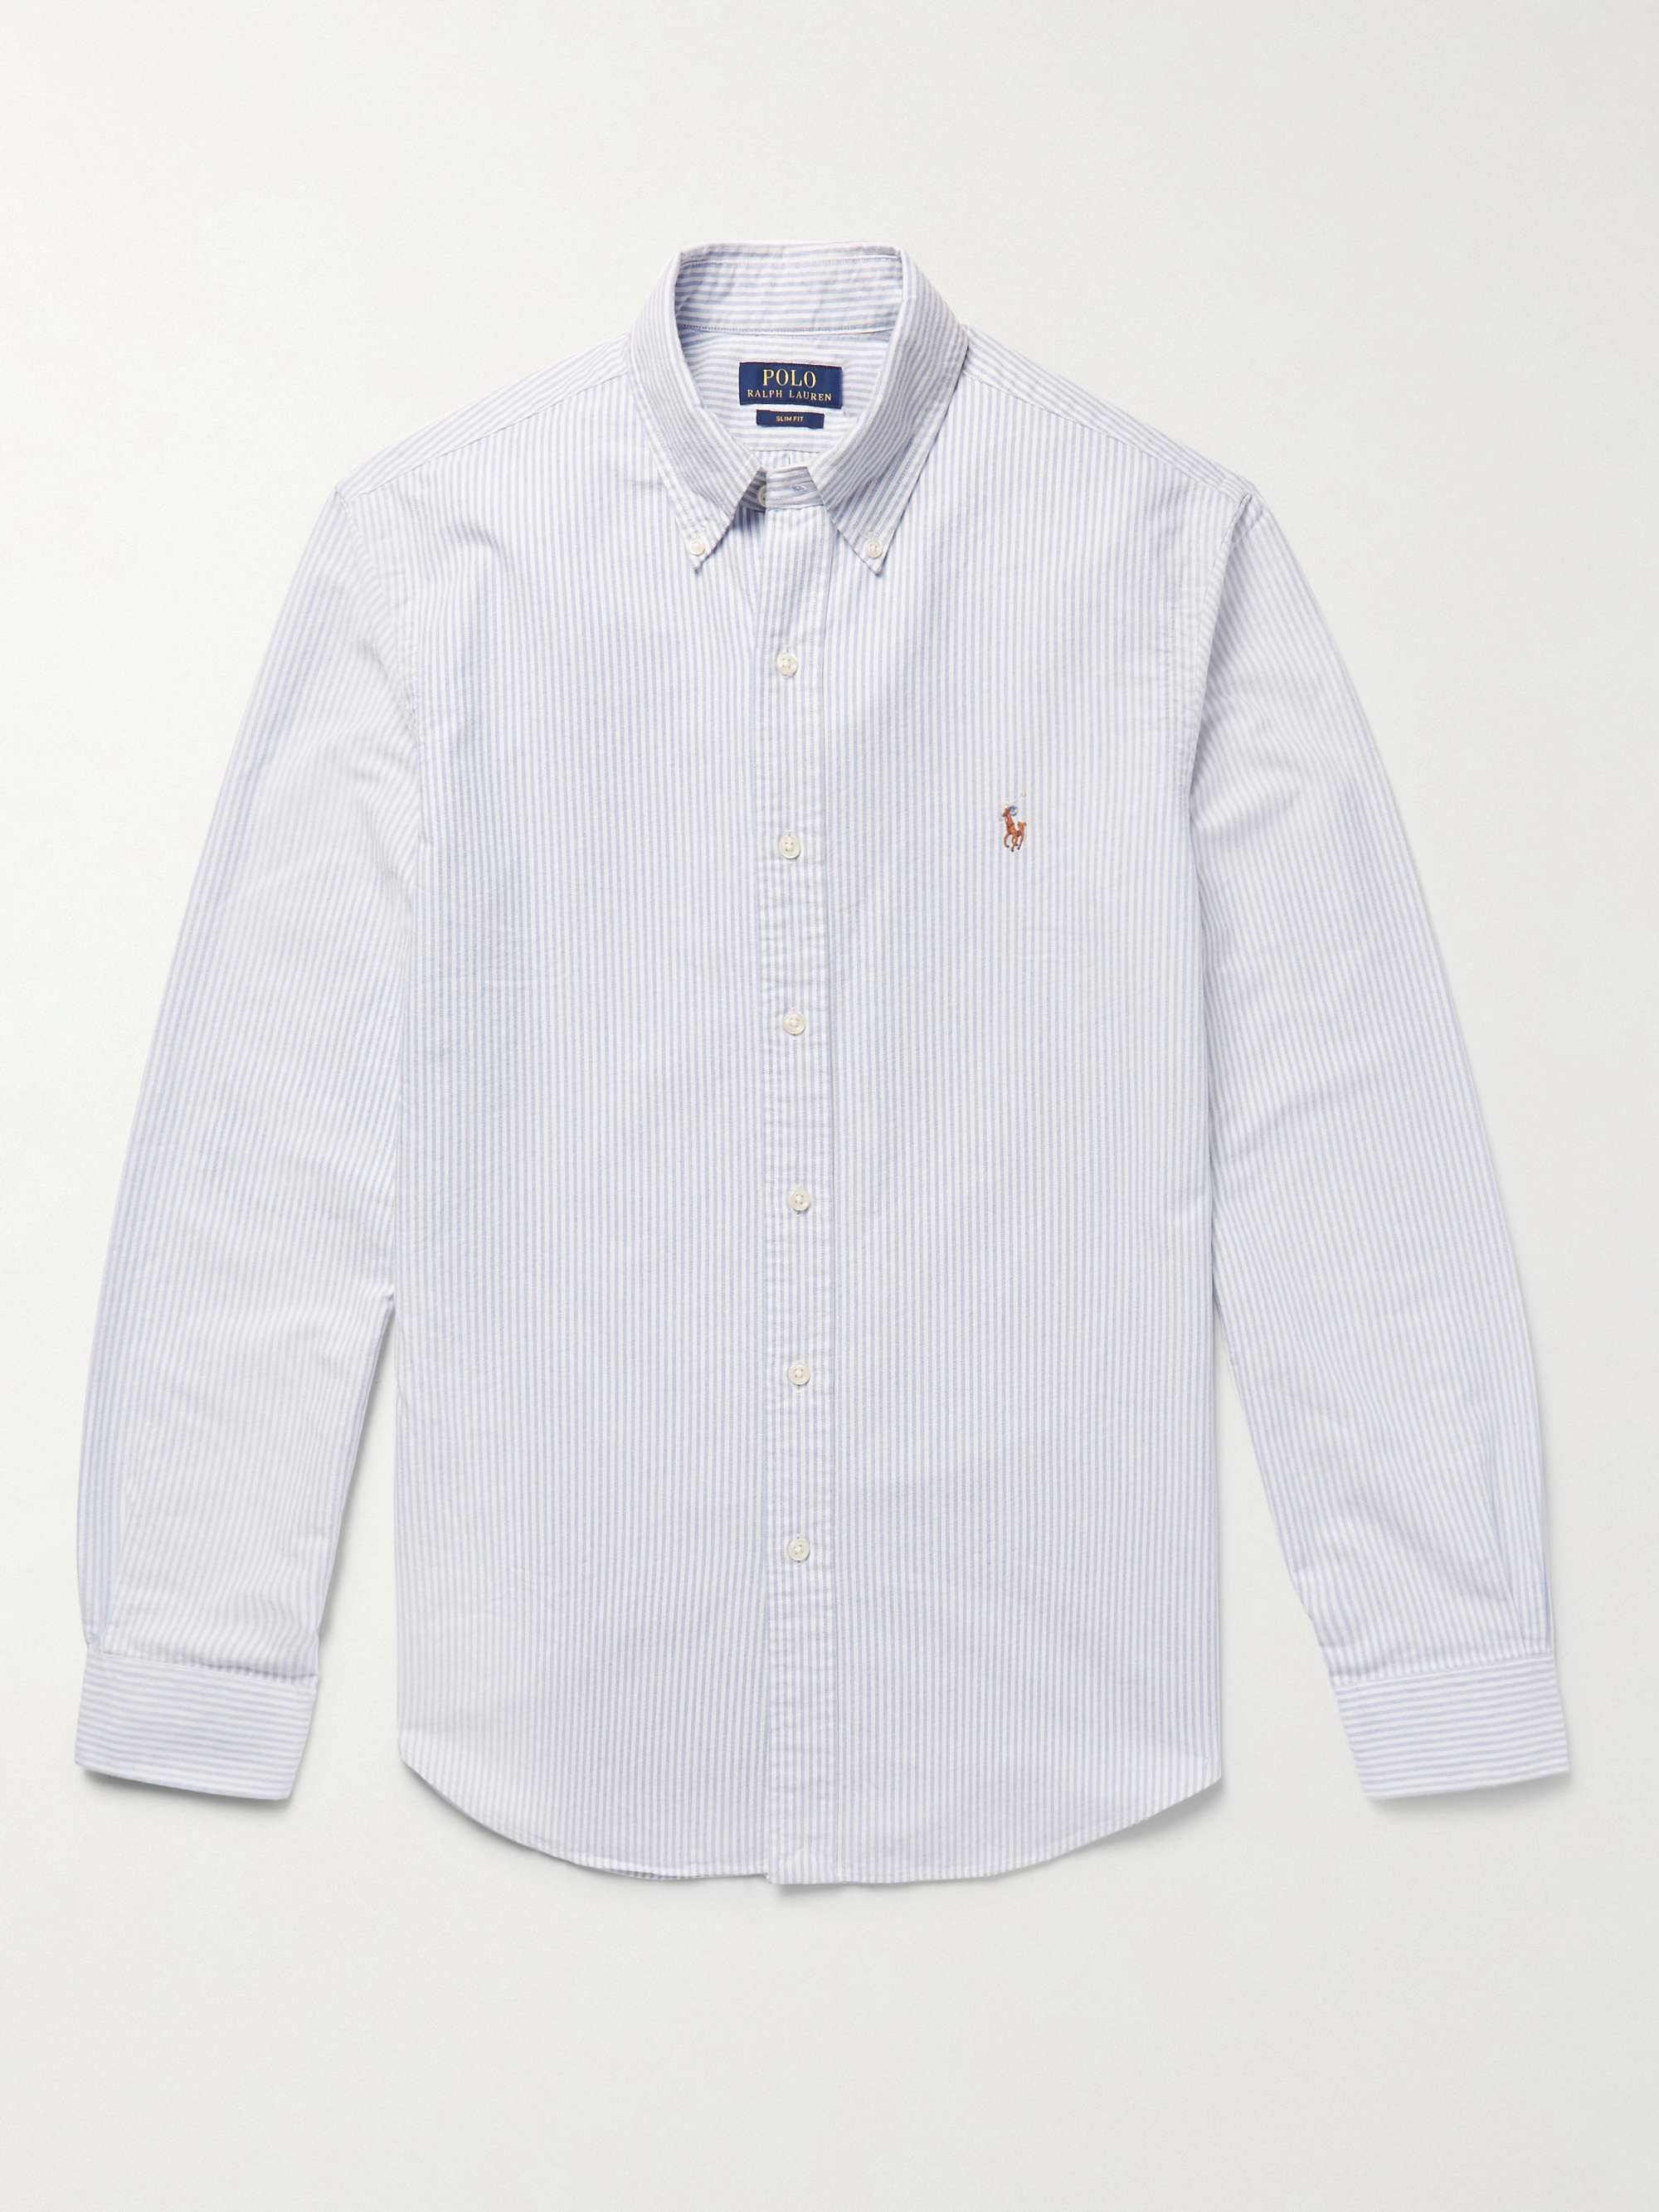 POLO RALPH LAUREN Slim-Fit Button-Down Collar Cotton Oxford Shirt for Men